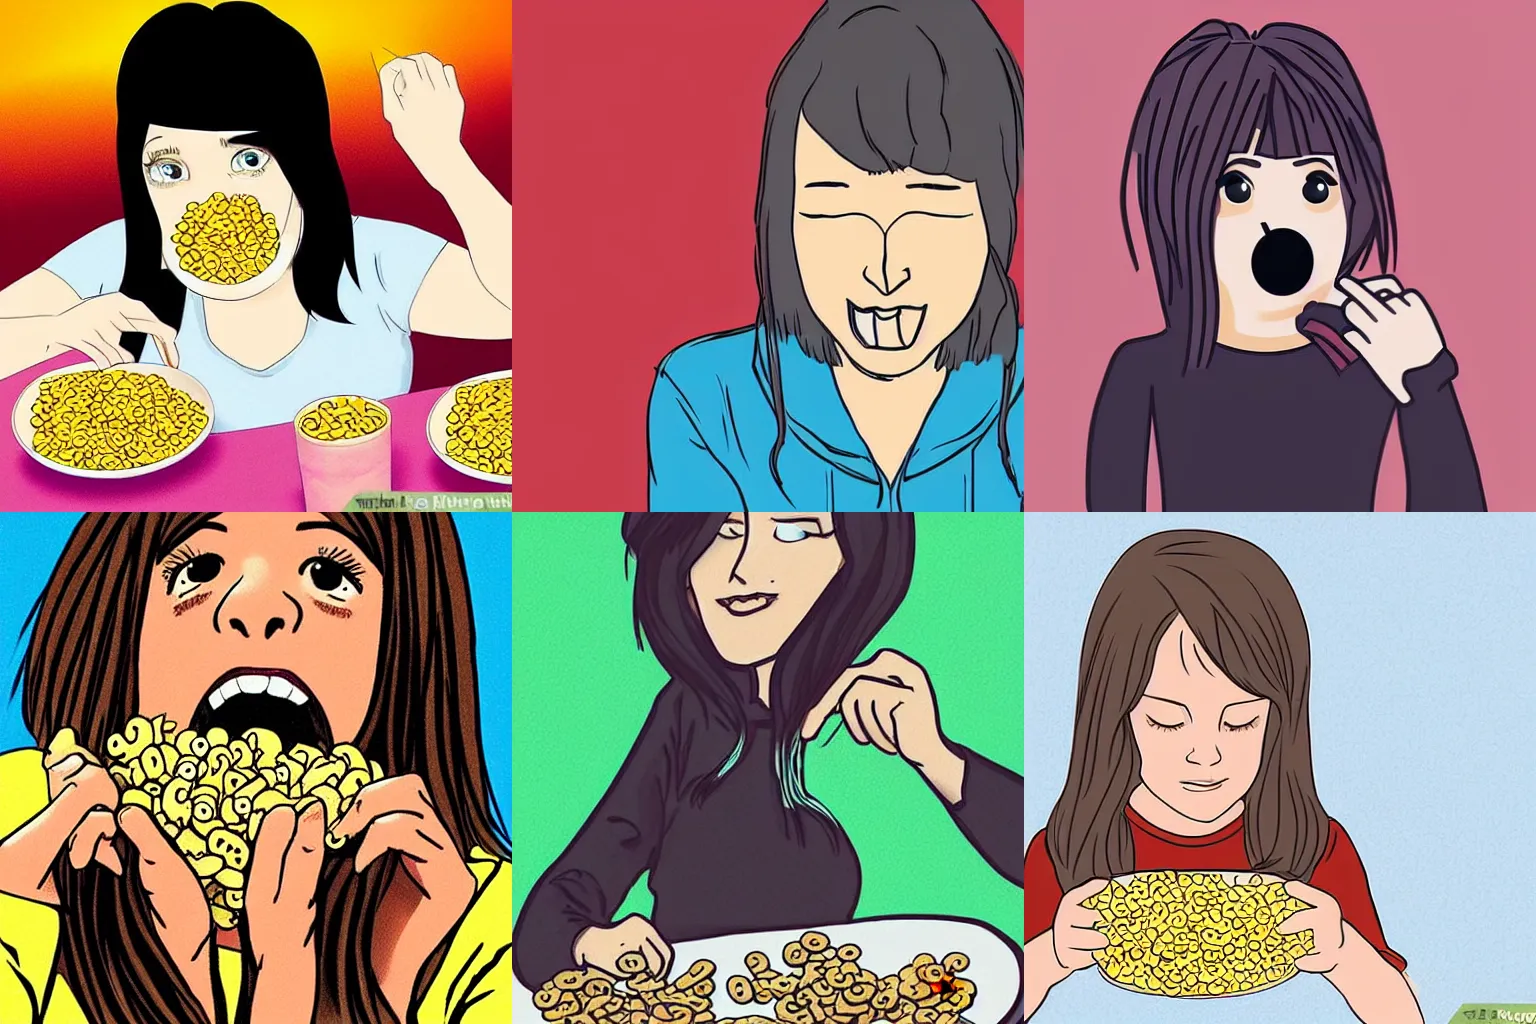 Prompt: “Emo girl eating Cheerios, wikihow illustraton”